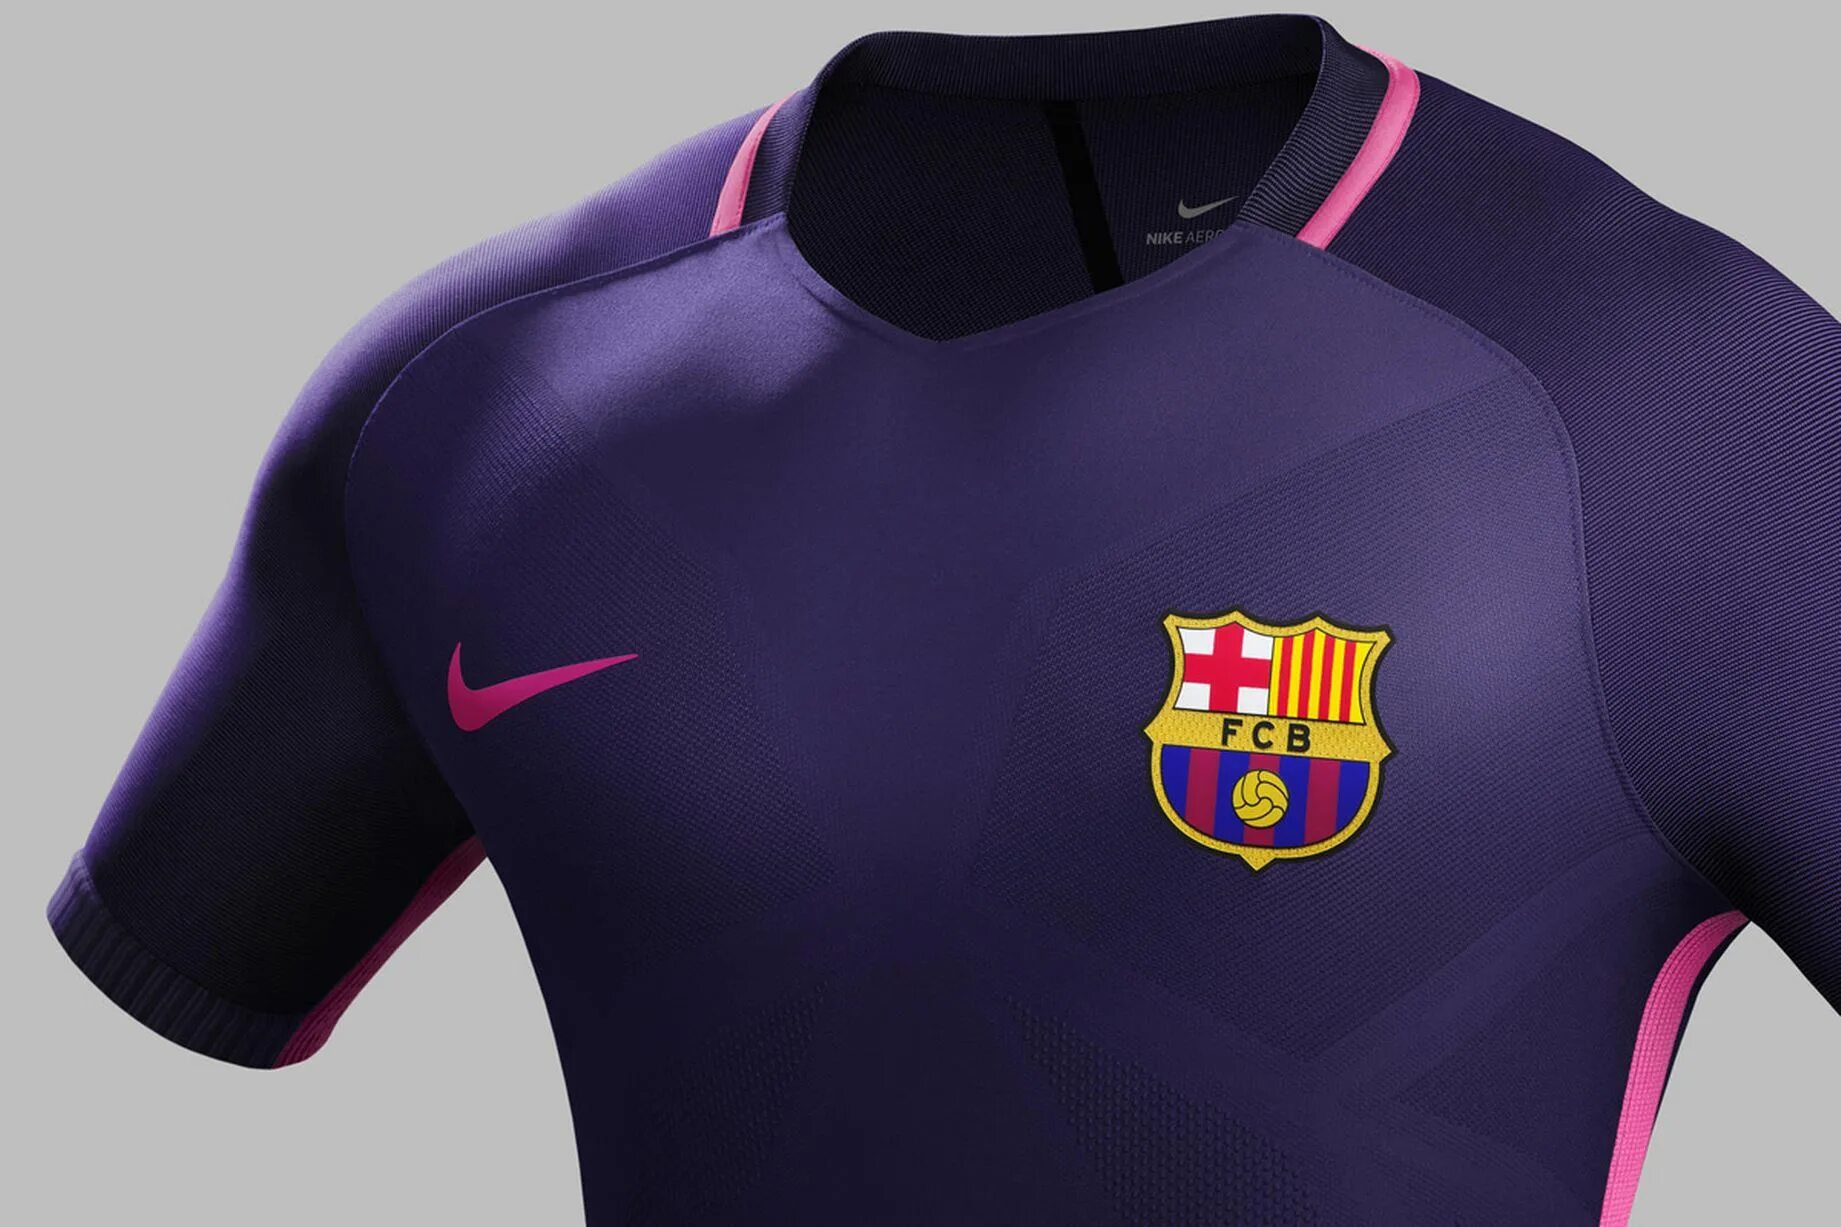 Barca Kit 2016-17. Nike Barcelona 2017. Форма Барселоны 16/17. Гостевая форма Барселоны 2017.